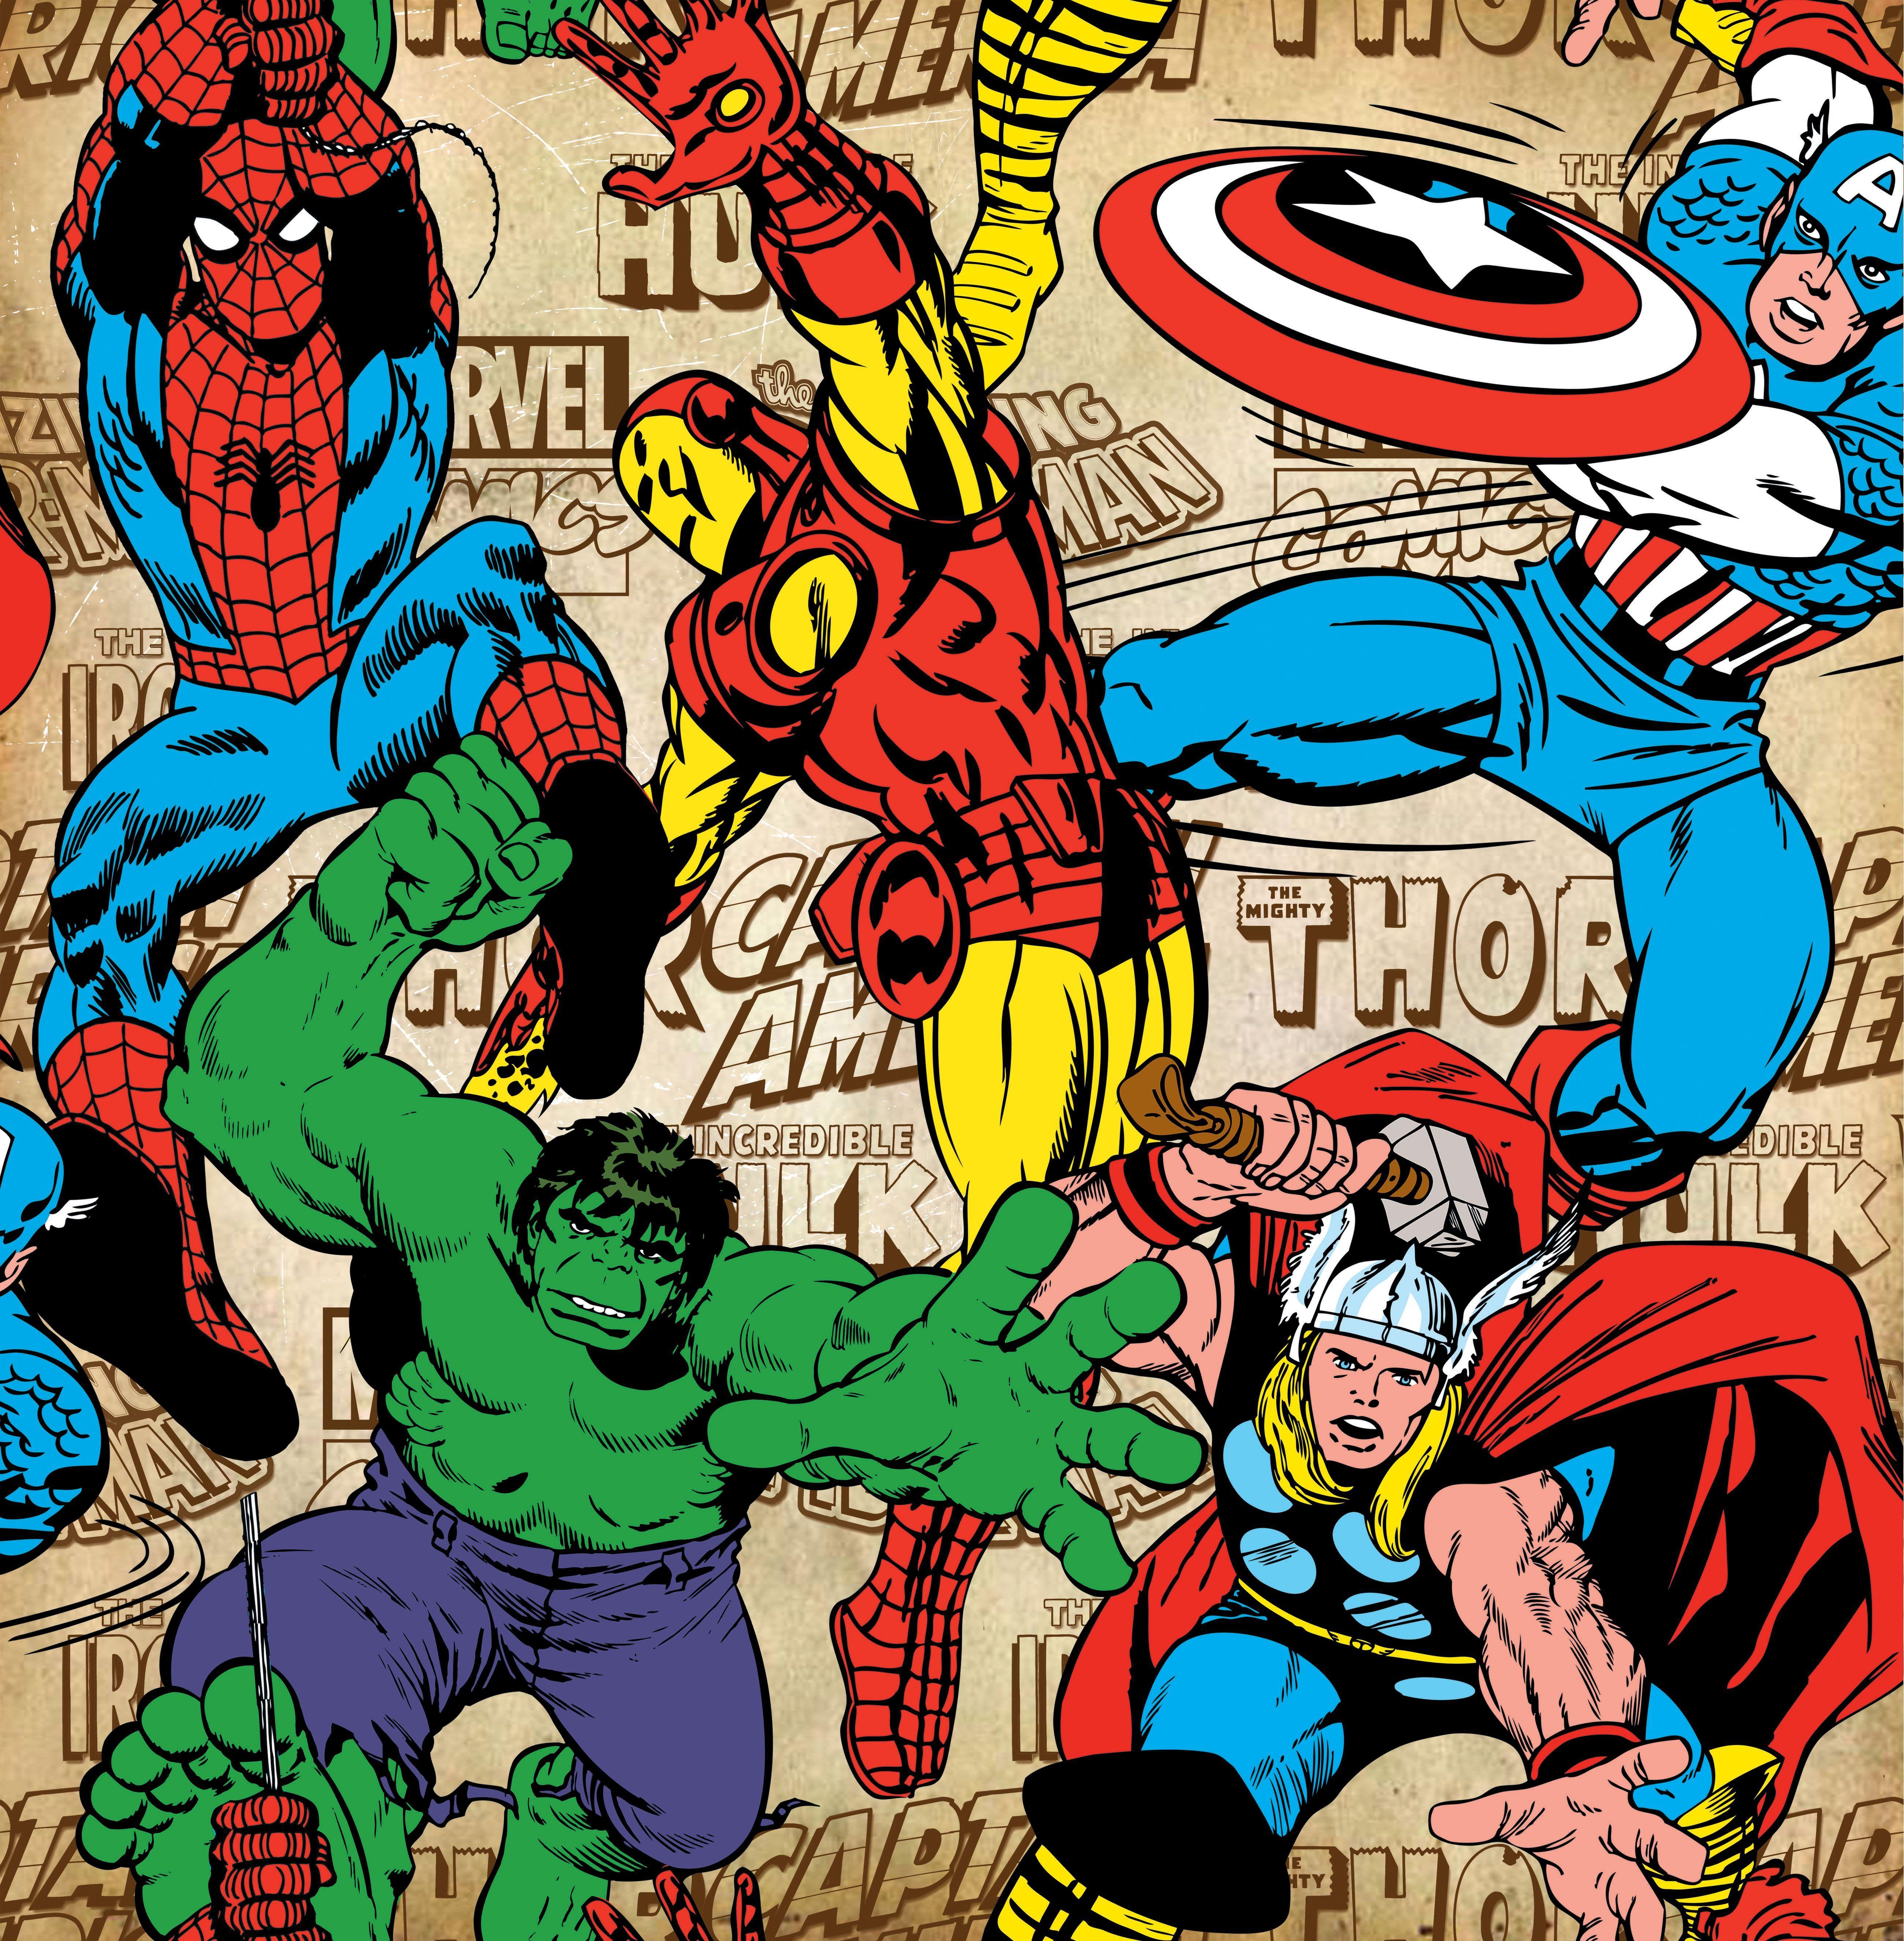 Comic Strip Wallpapers